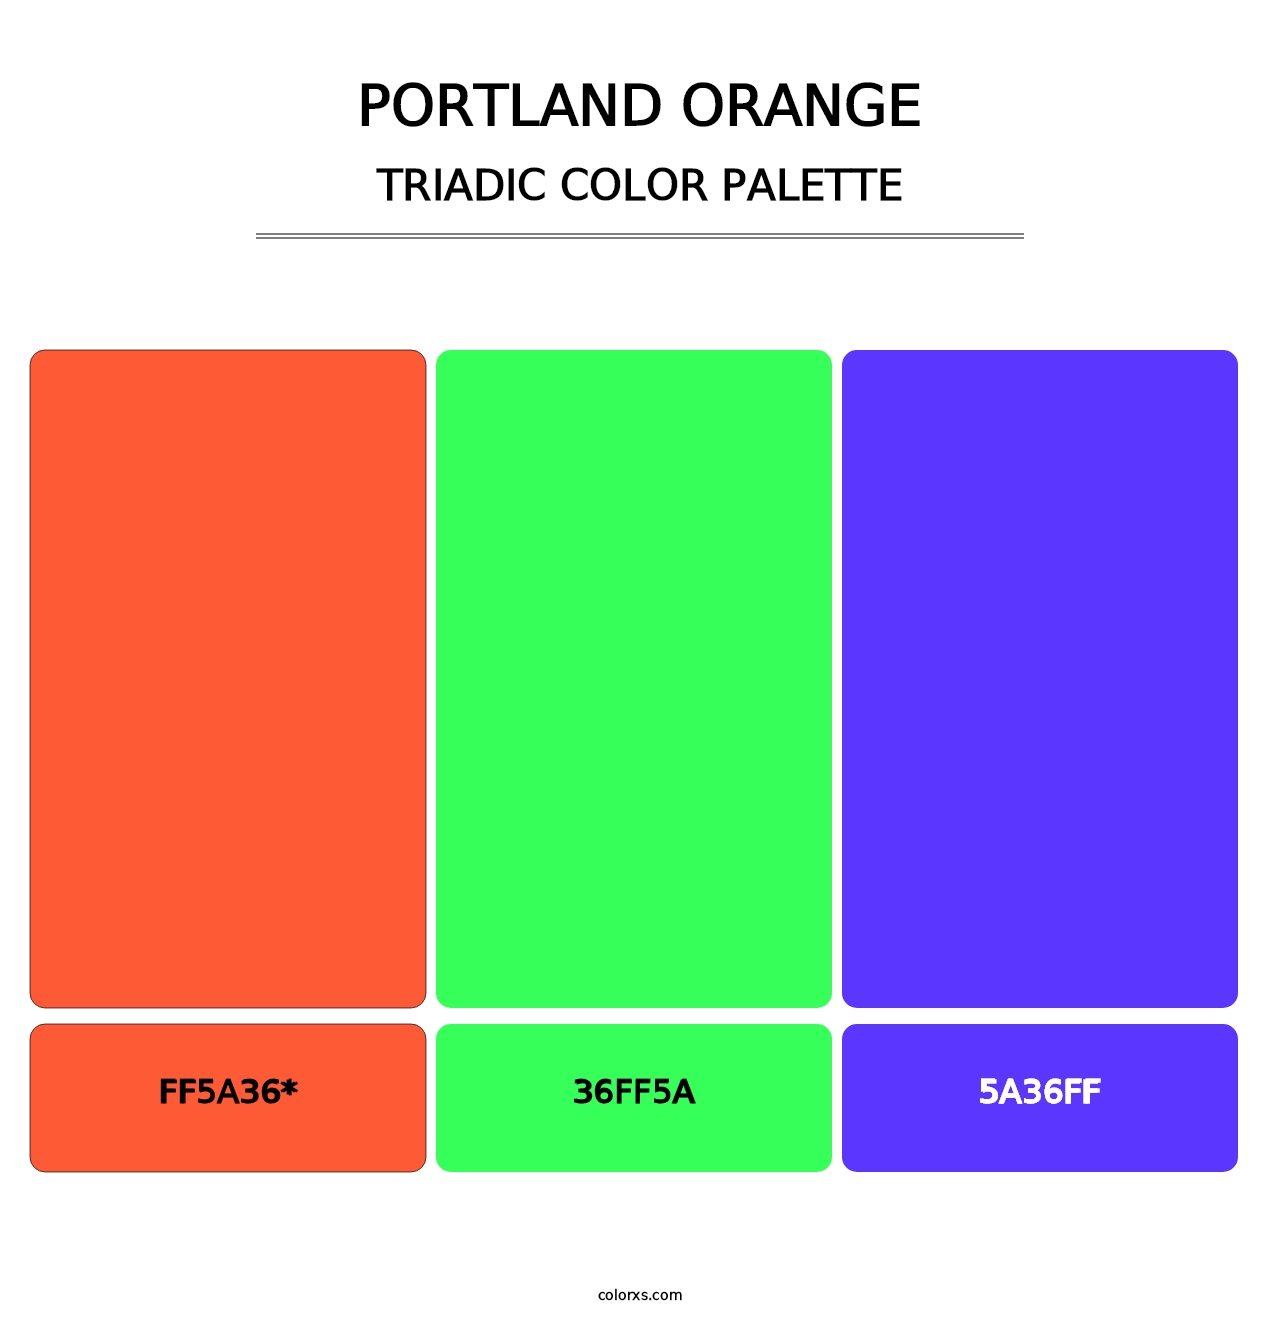 Portland Orange - Triadic Color Palette